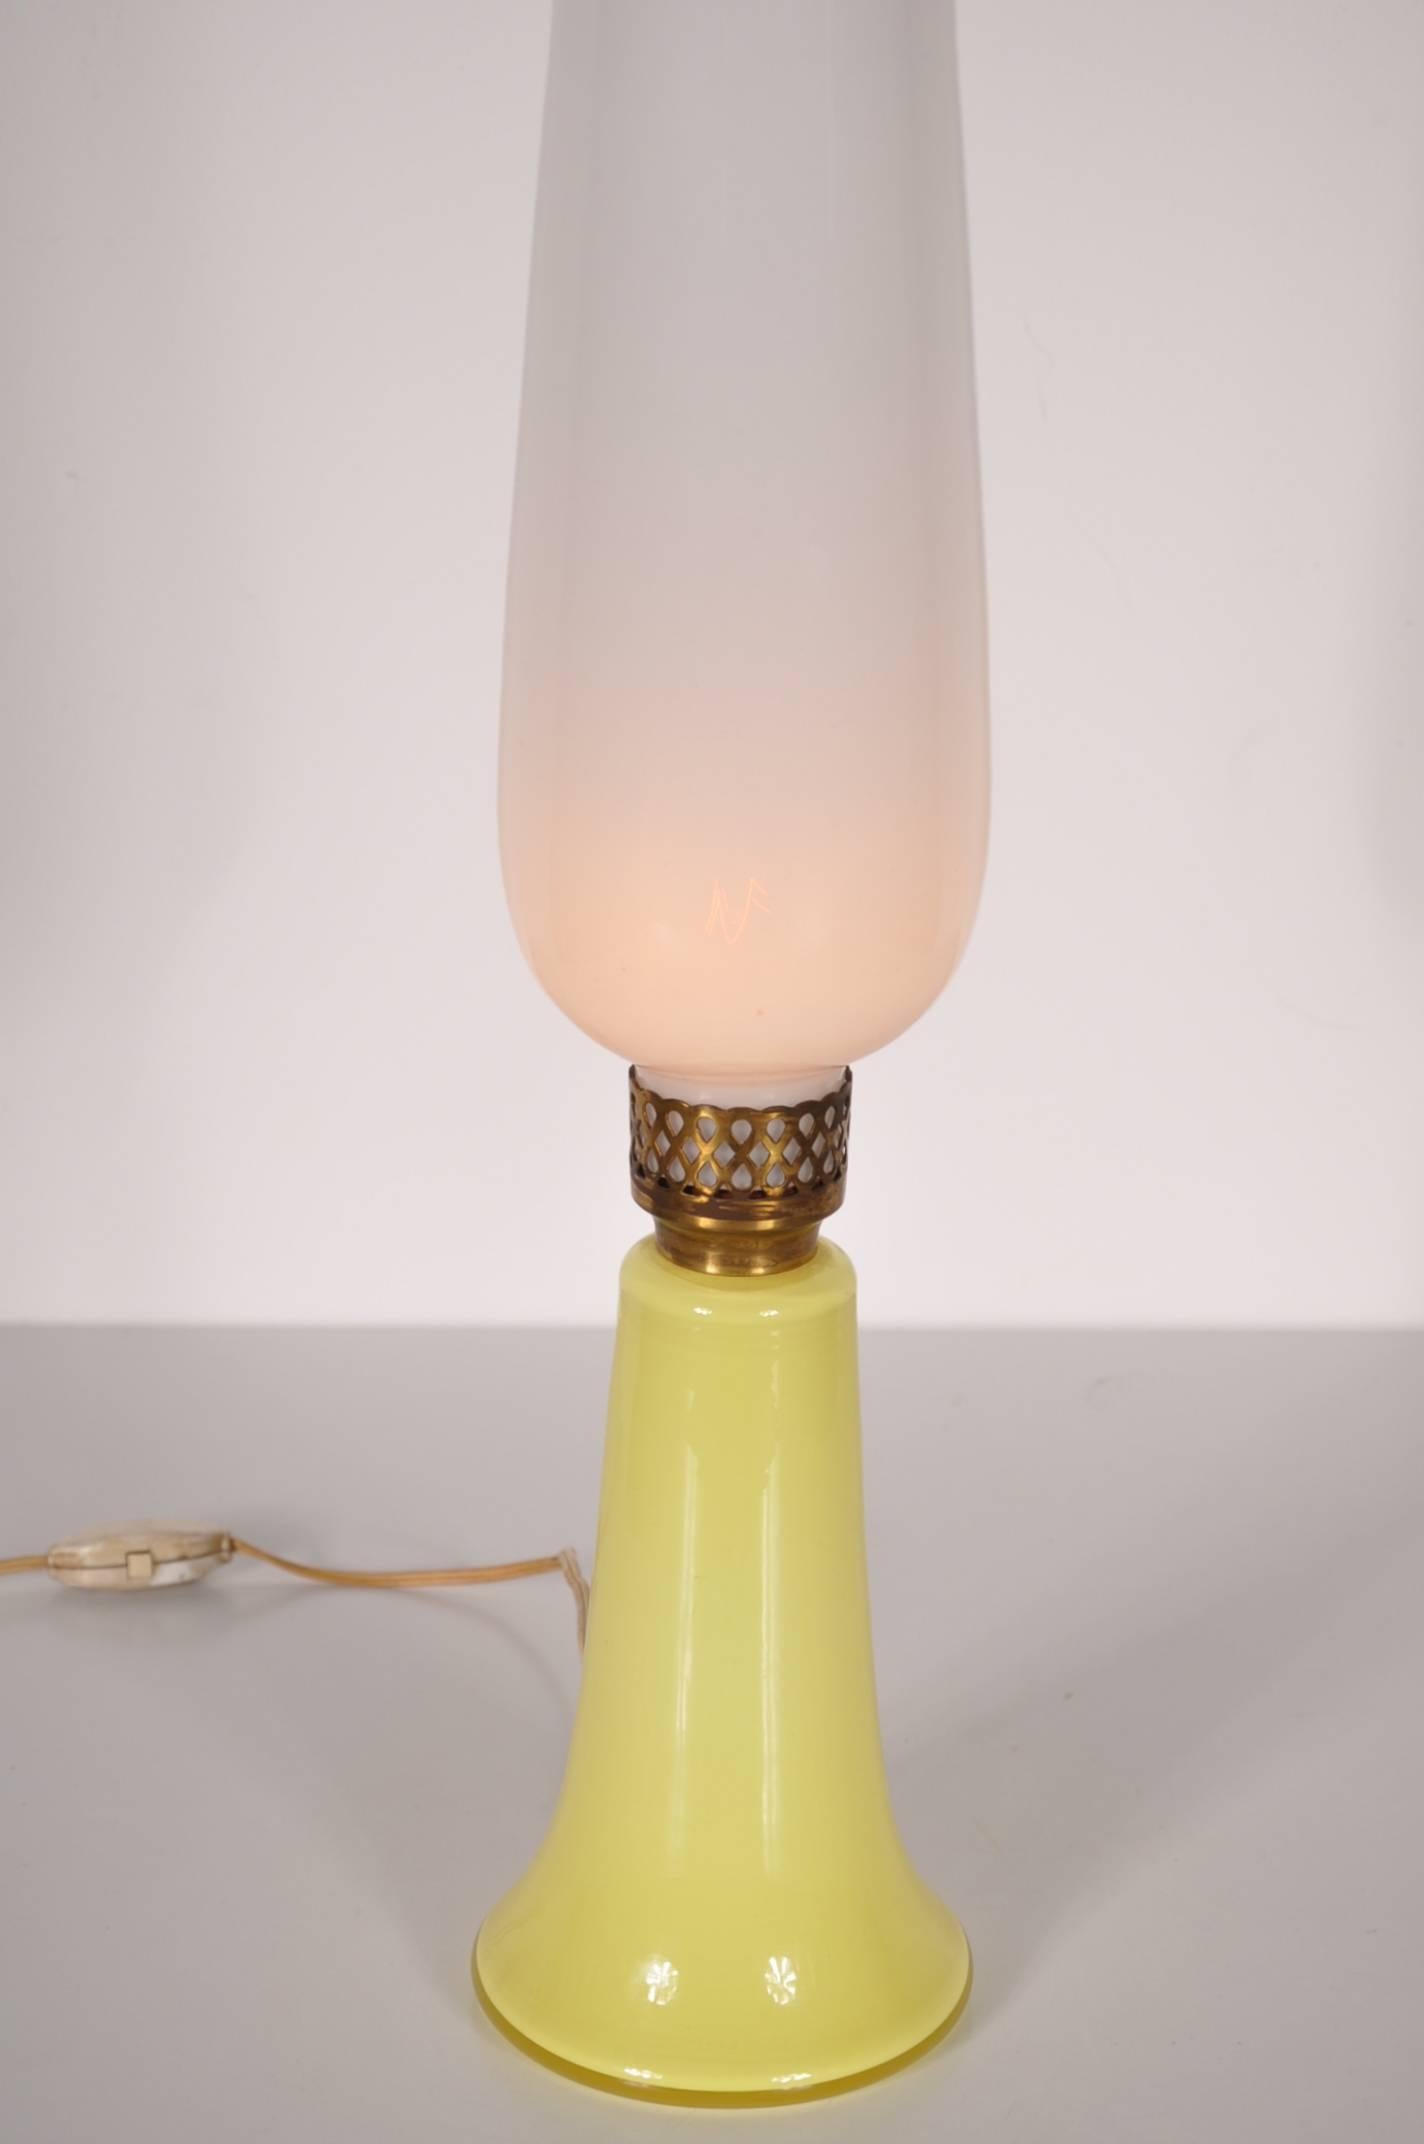 Mid-Century Modern Table Lamp by Venini Italy, circa 1950